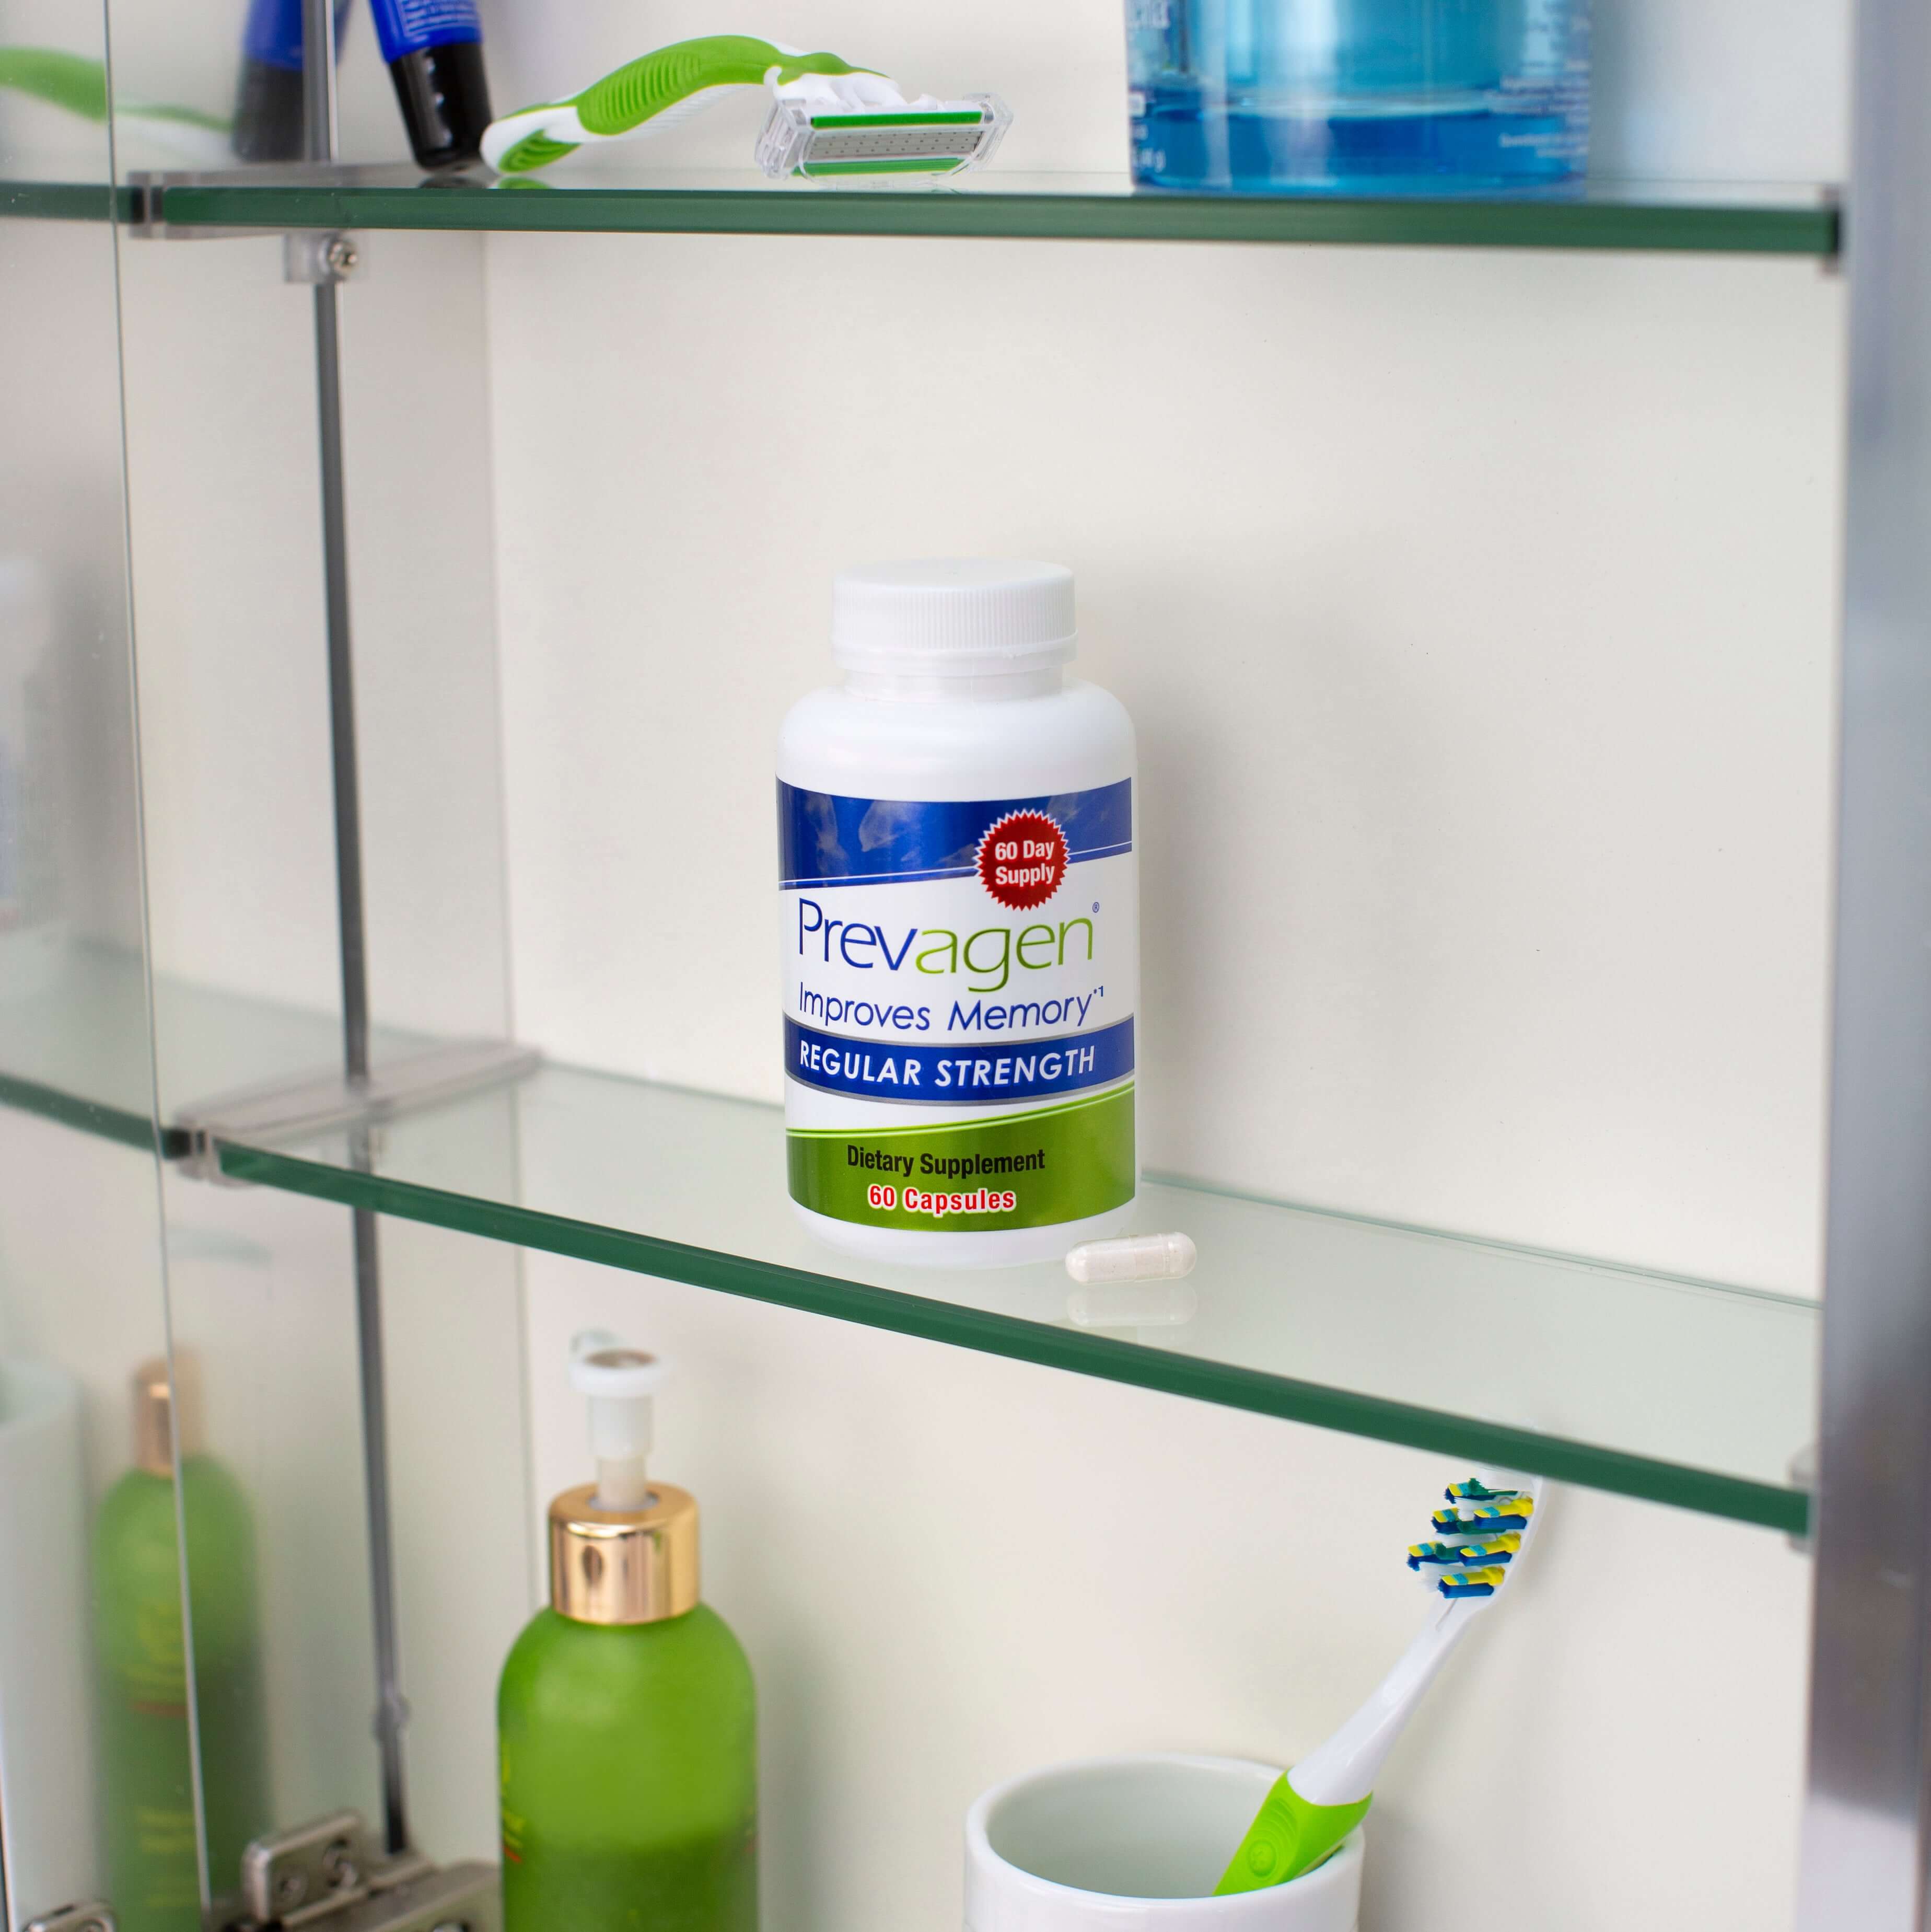 Slide 6 of 6, Bottle of Prevagen regular strength capsules in a 60 day supply on medicine cabinet shelf